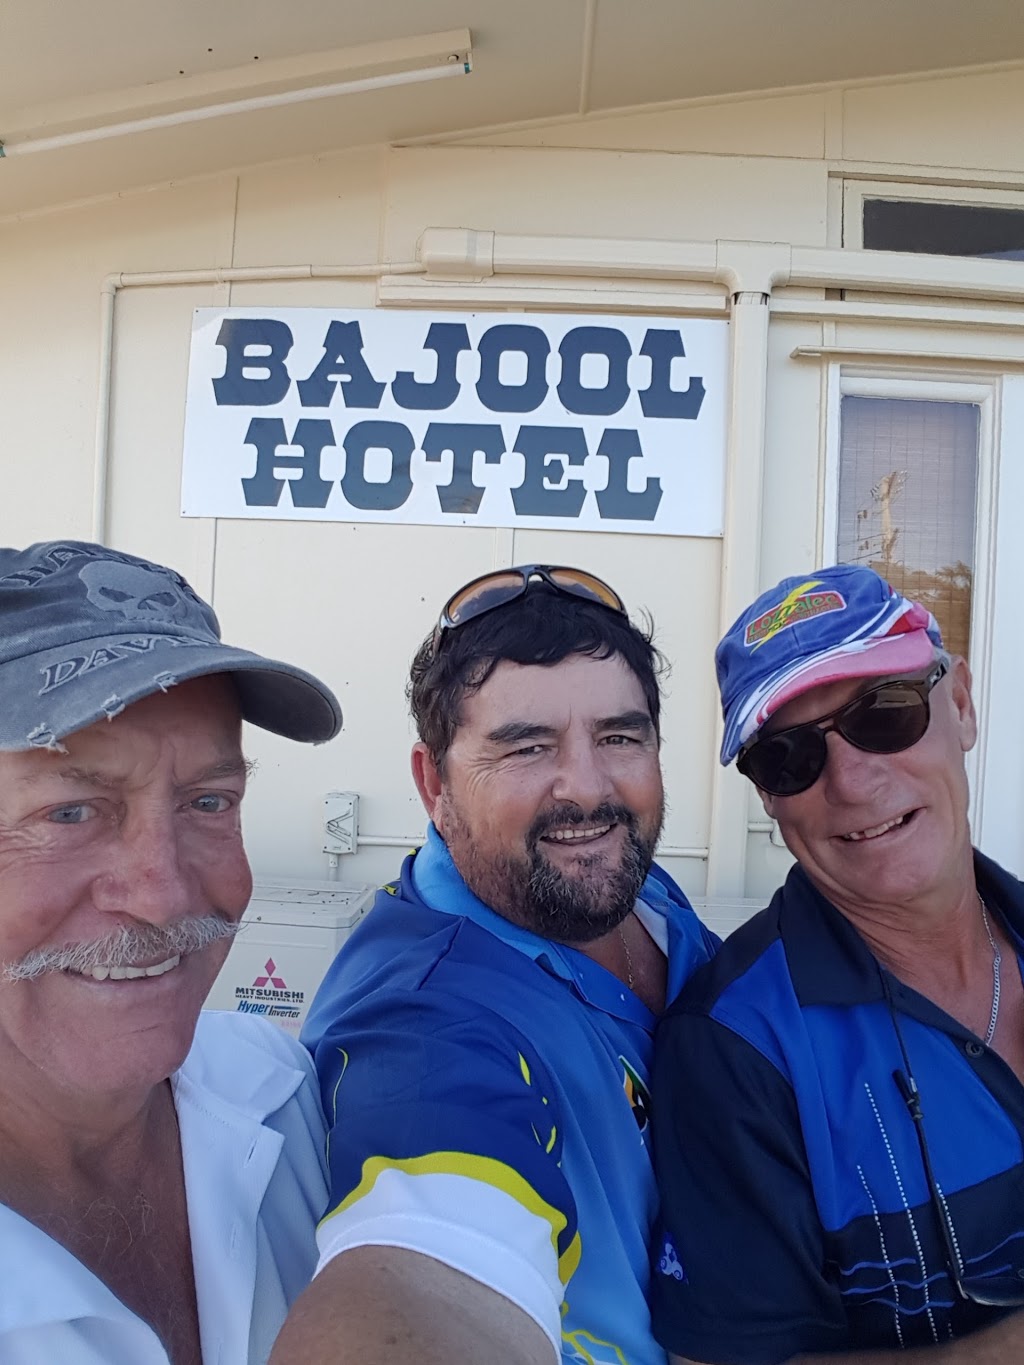 Bajool Country Hotel | 86 High St, Bajool QLD 4699, Australia | Phone: (07) 4934 6120